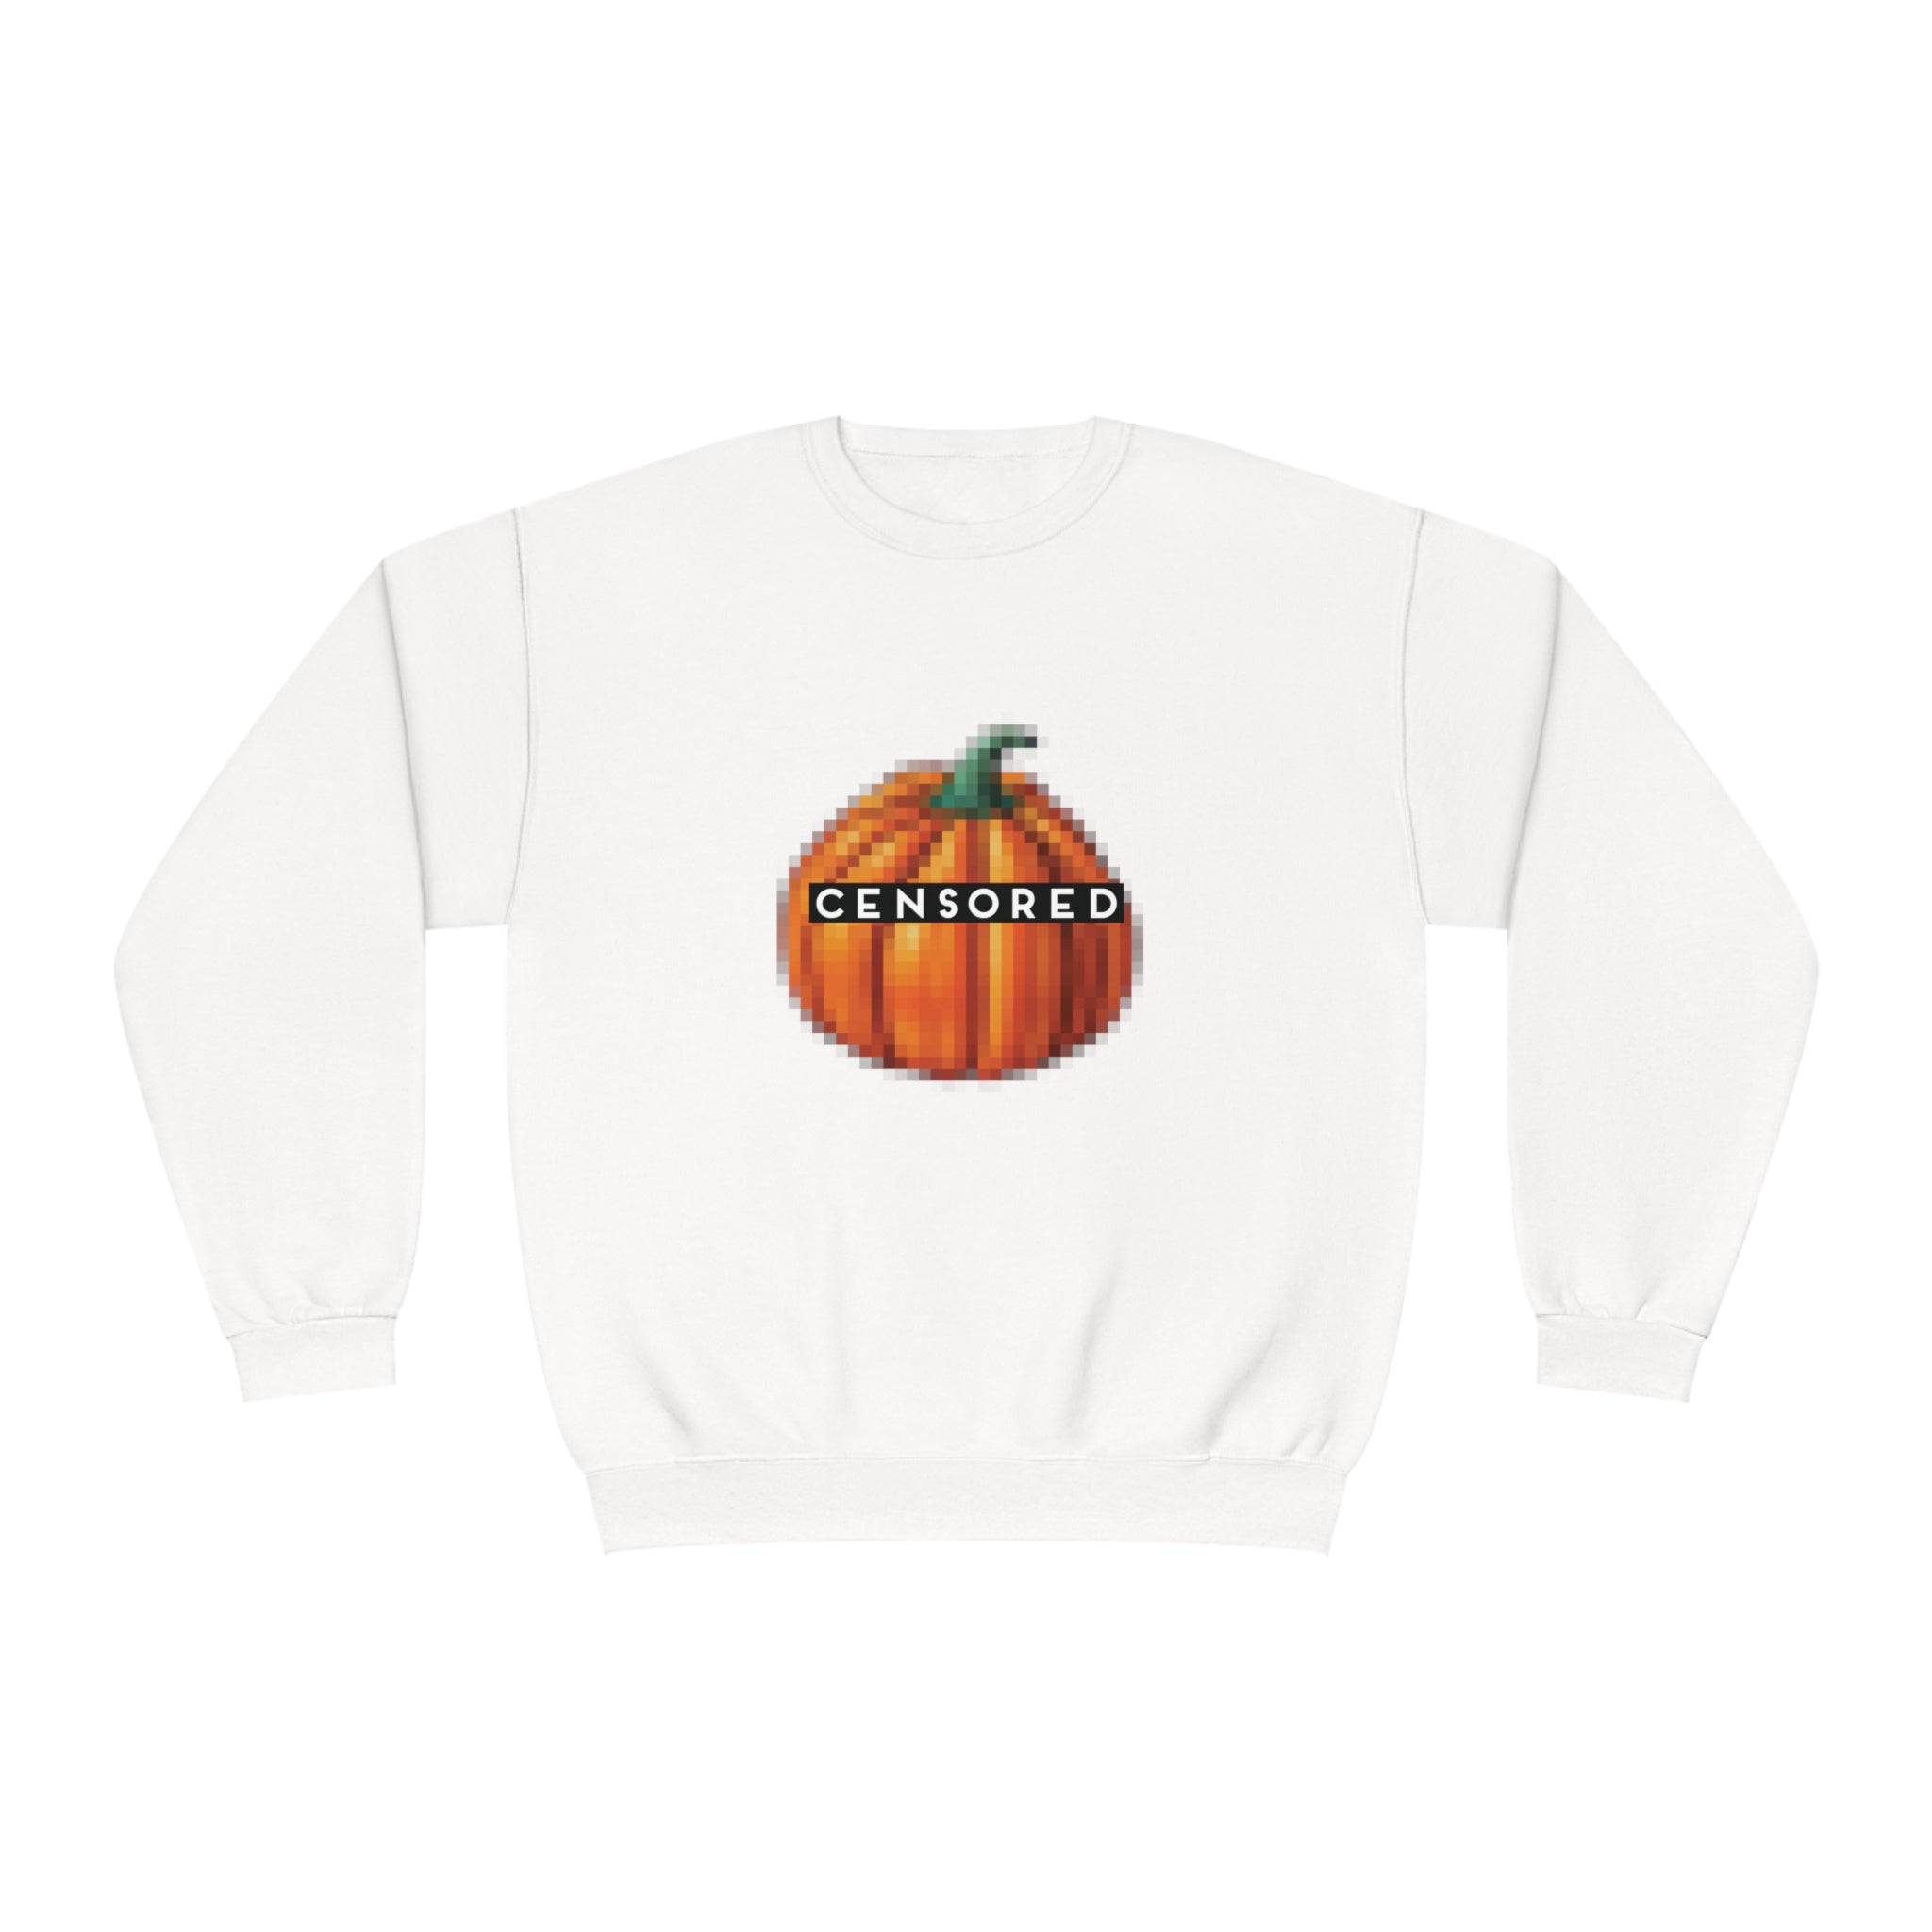 Stop Looking at my Pumpkin Sweatshirt